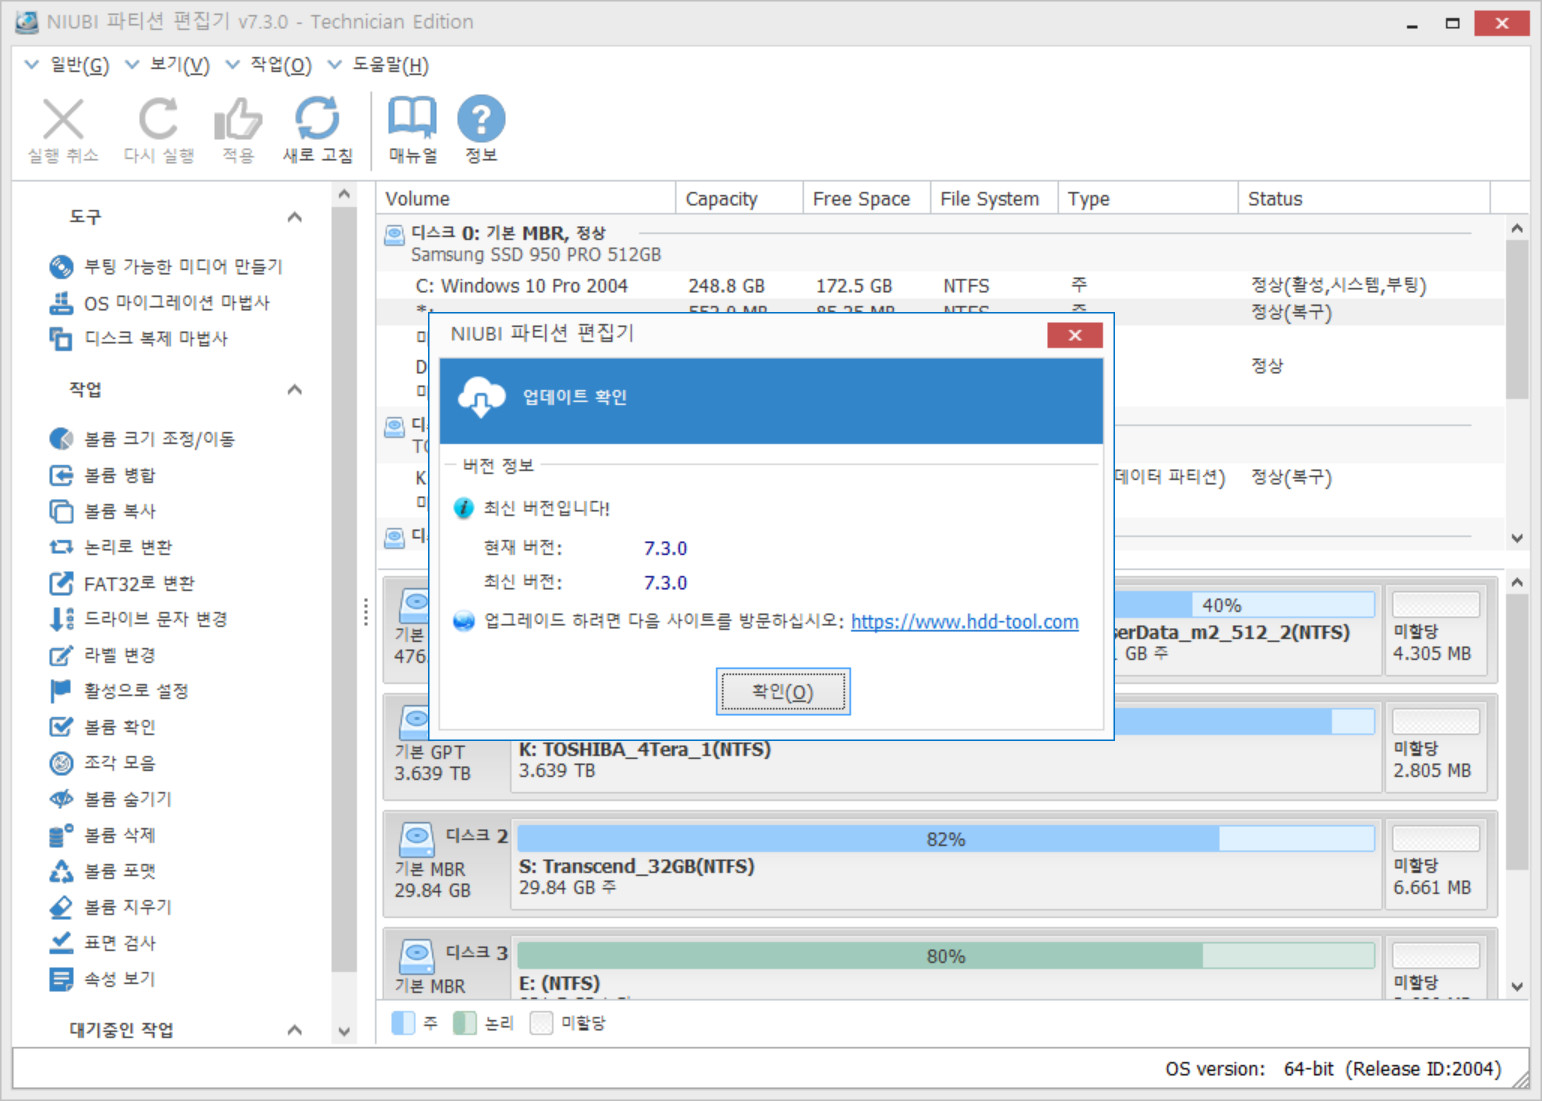 NIUBI Partition Editor Pro / Technician 9.9.0 download the new version